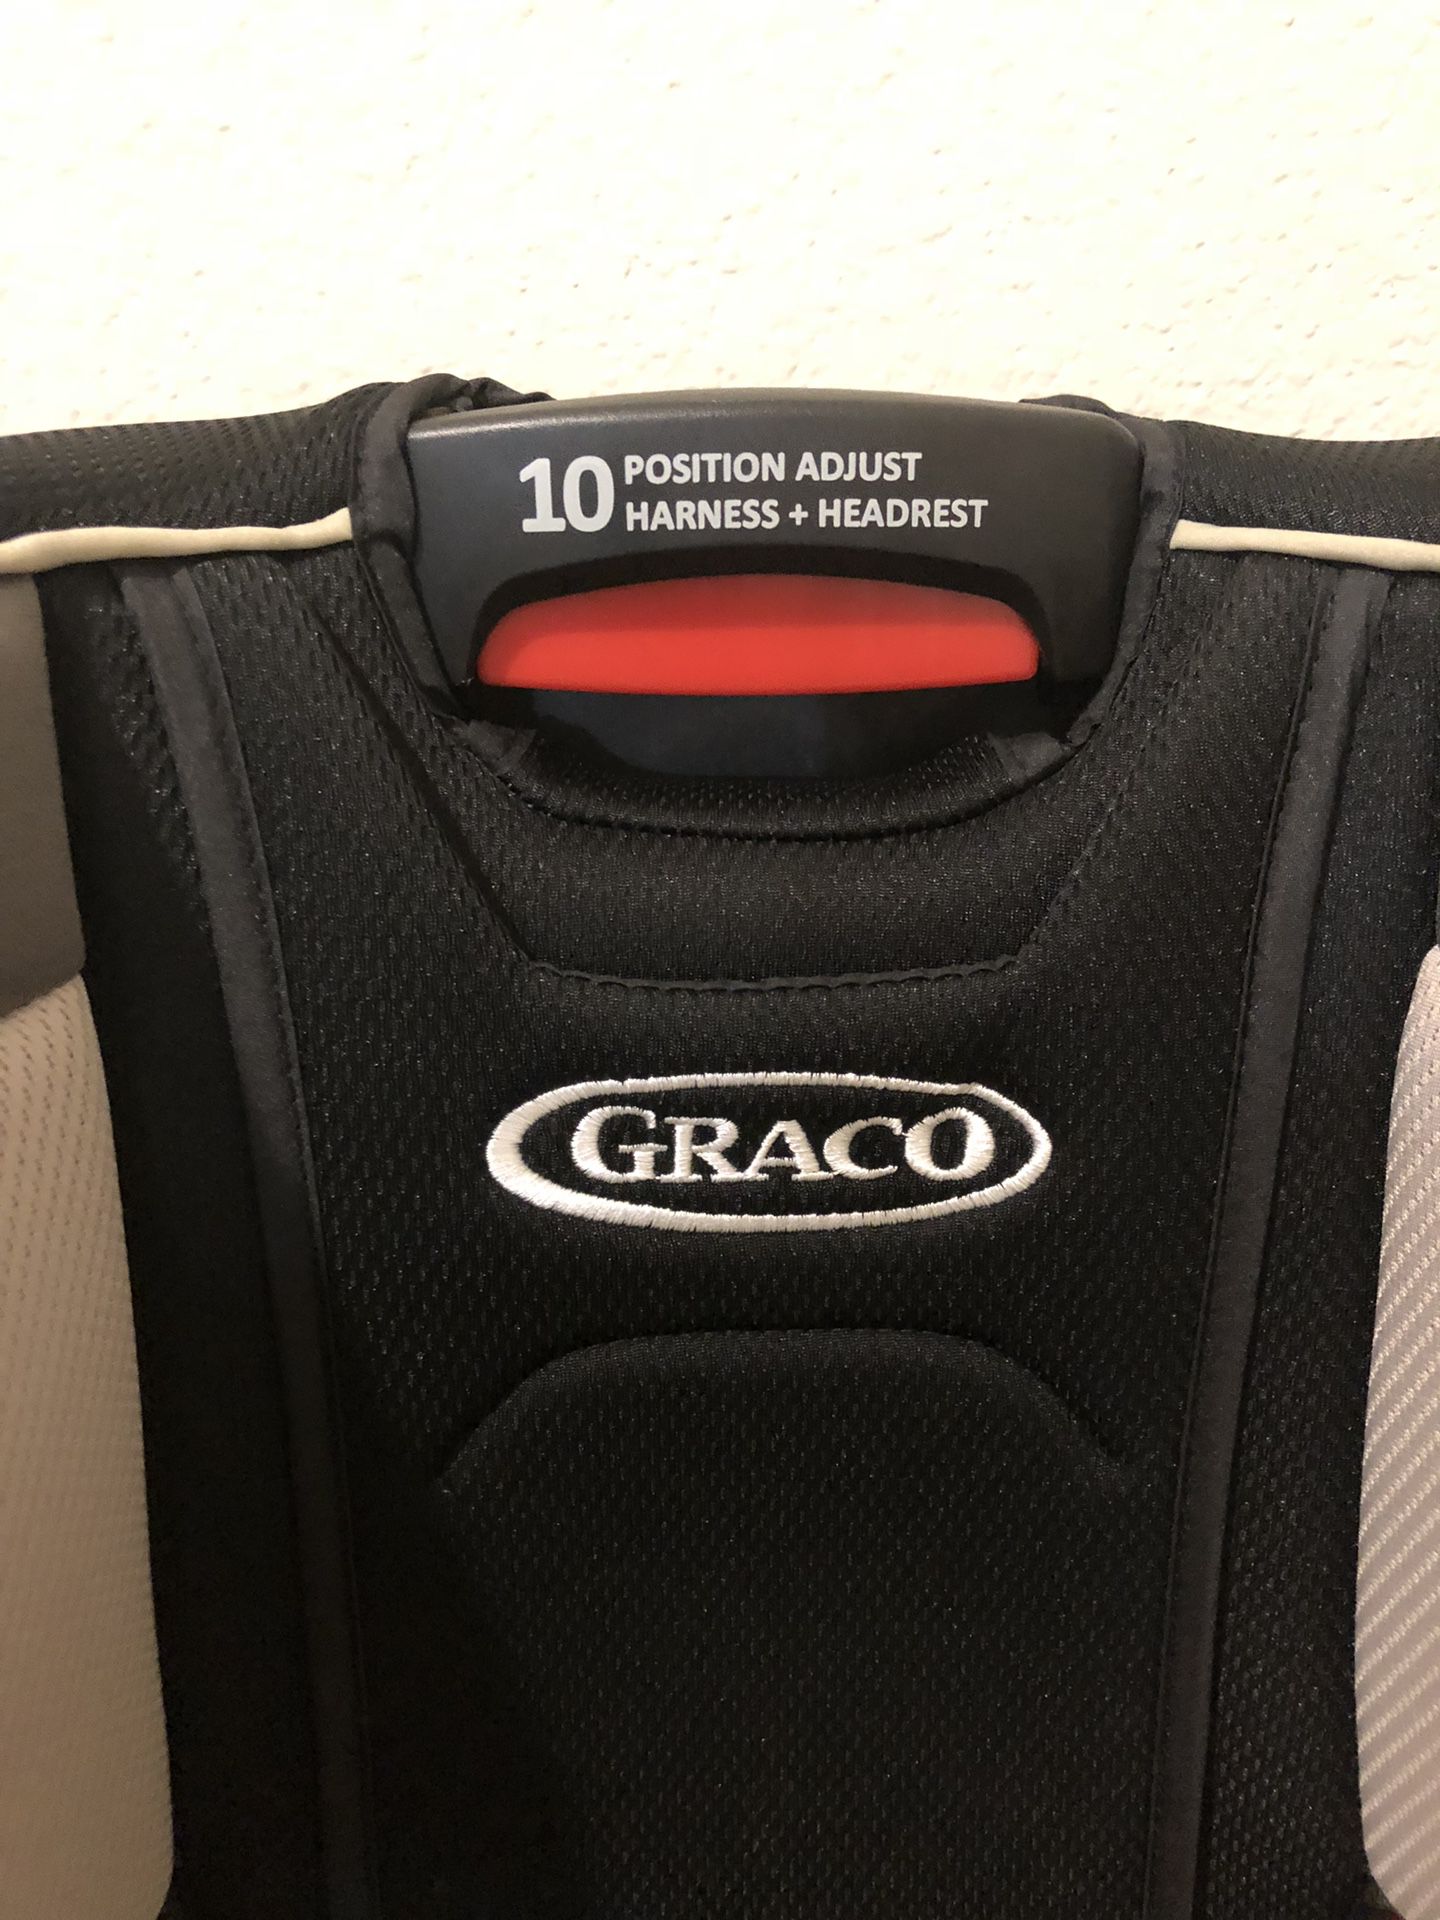 Graco Car Seat-10 Position Adjust Harness + Headrest